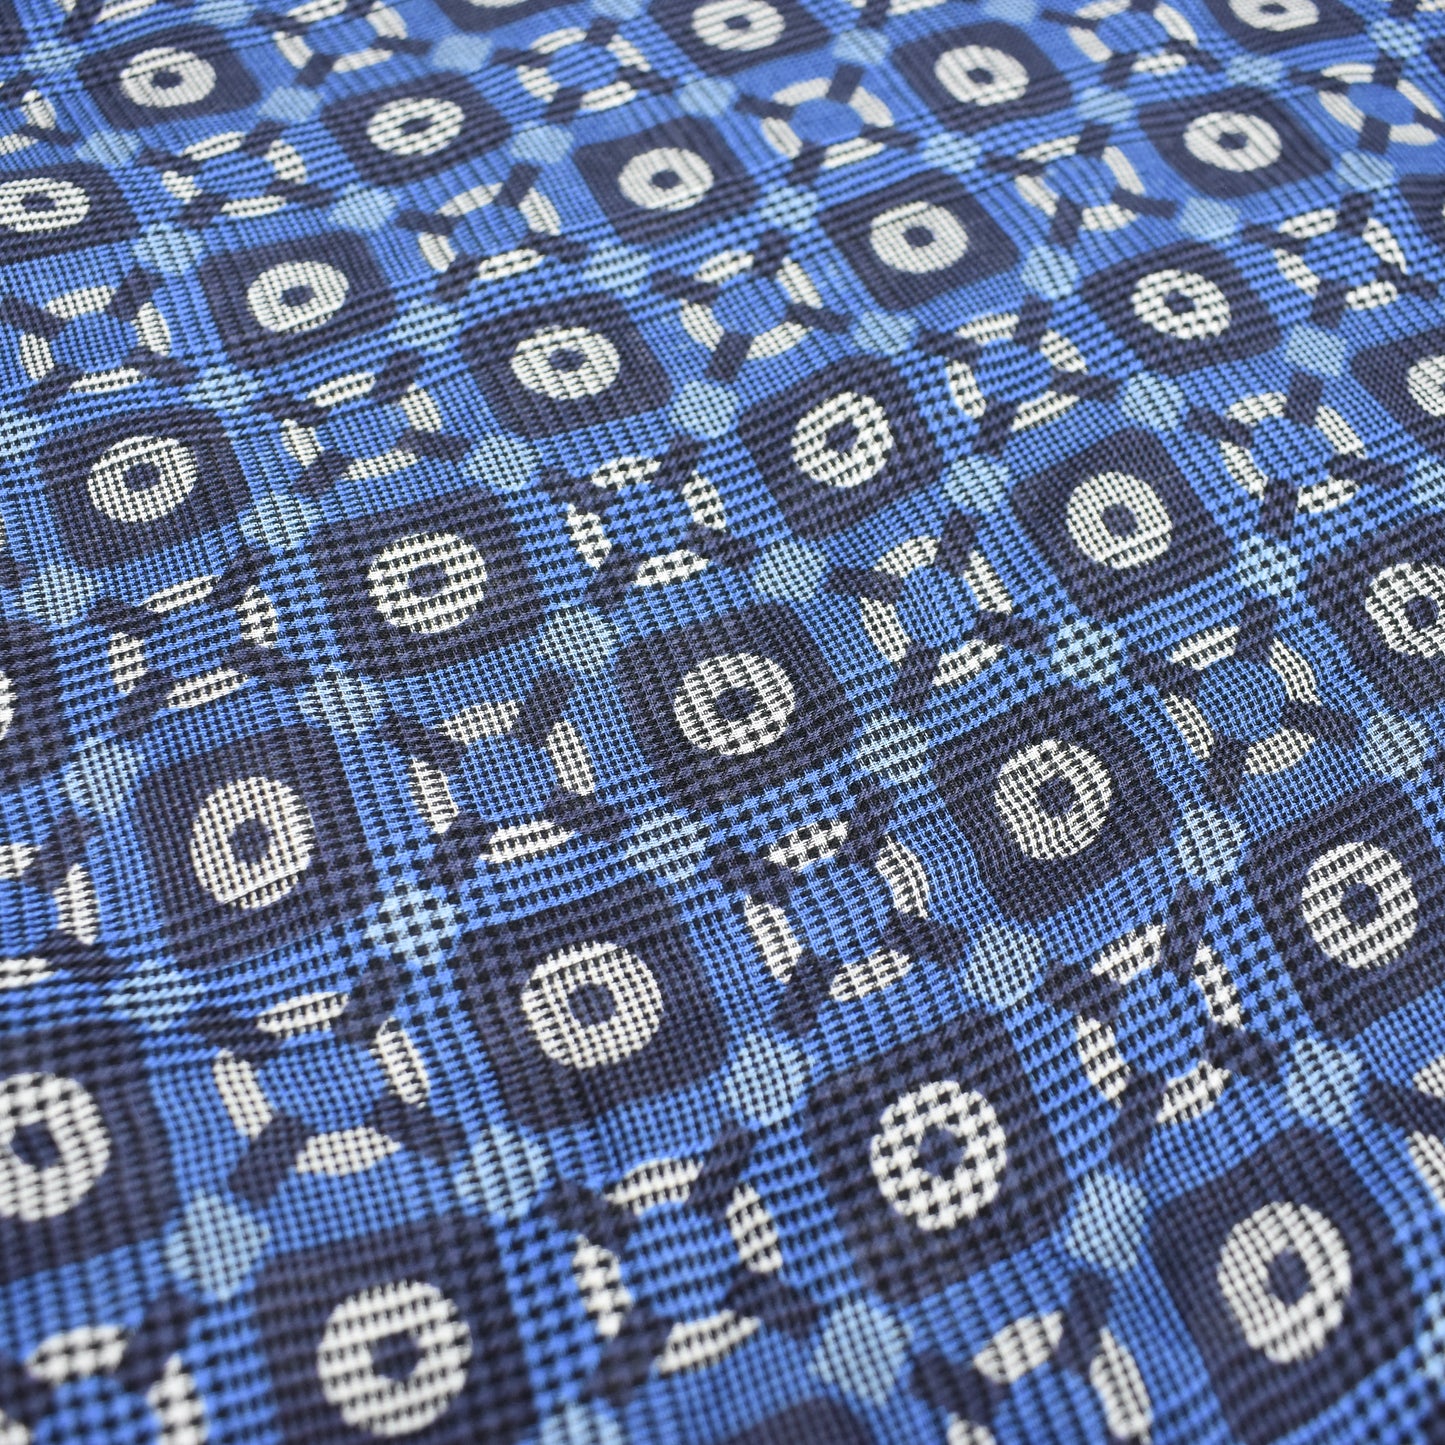 Corneliani - Large Blue Geometric Print Modal Scarf